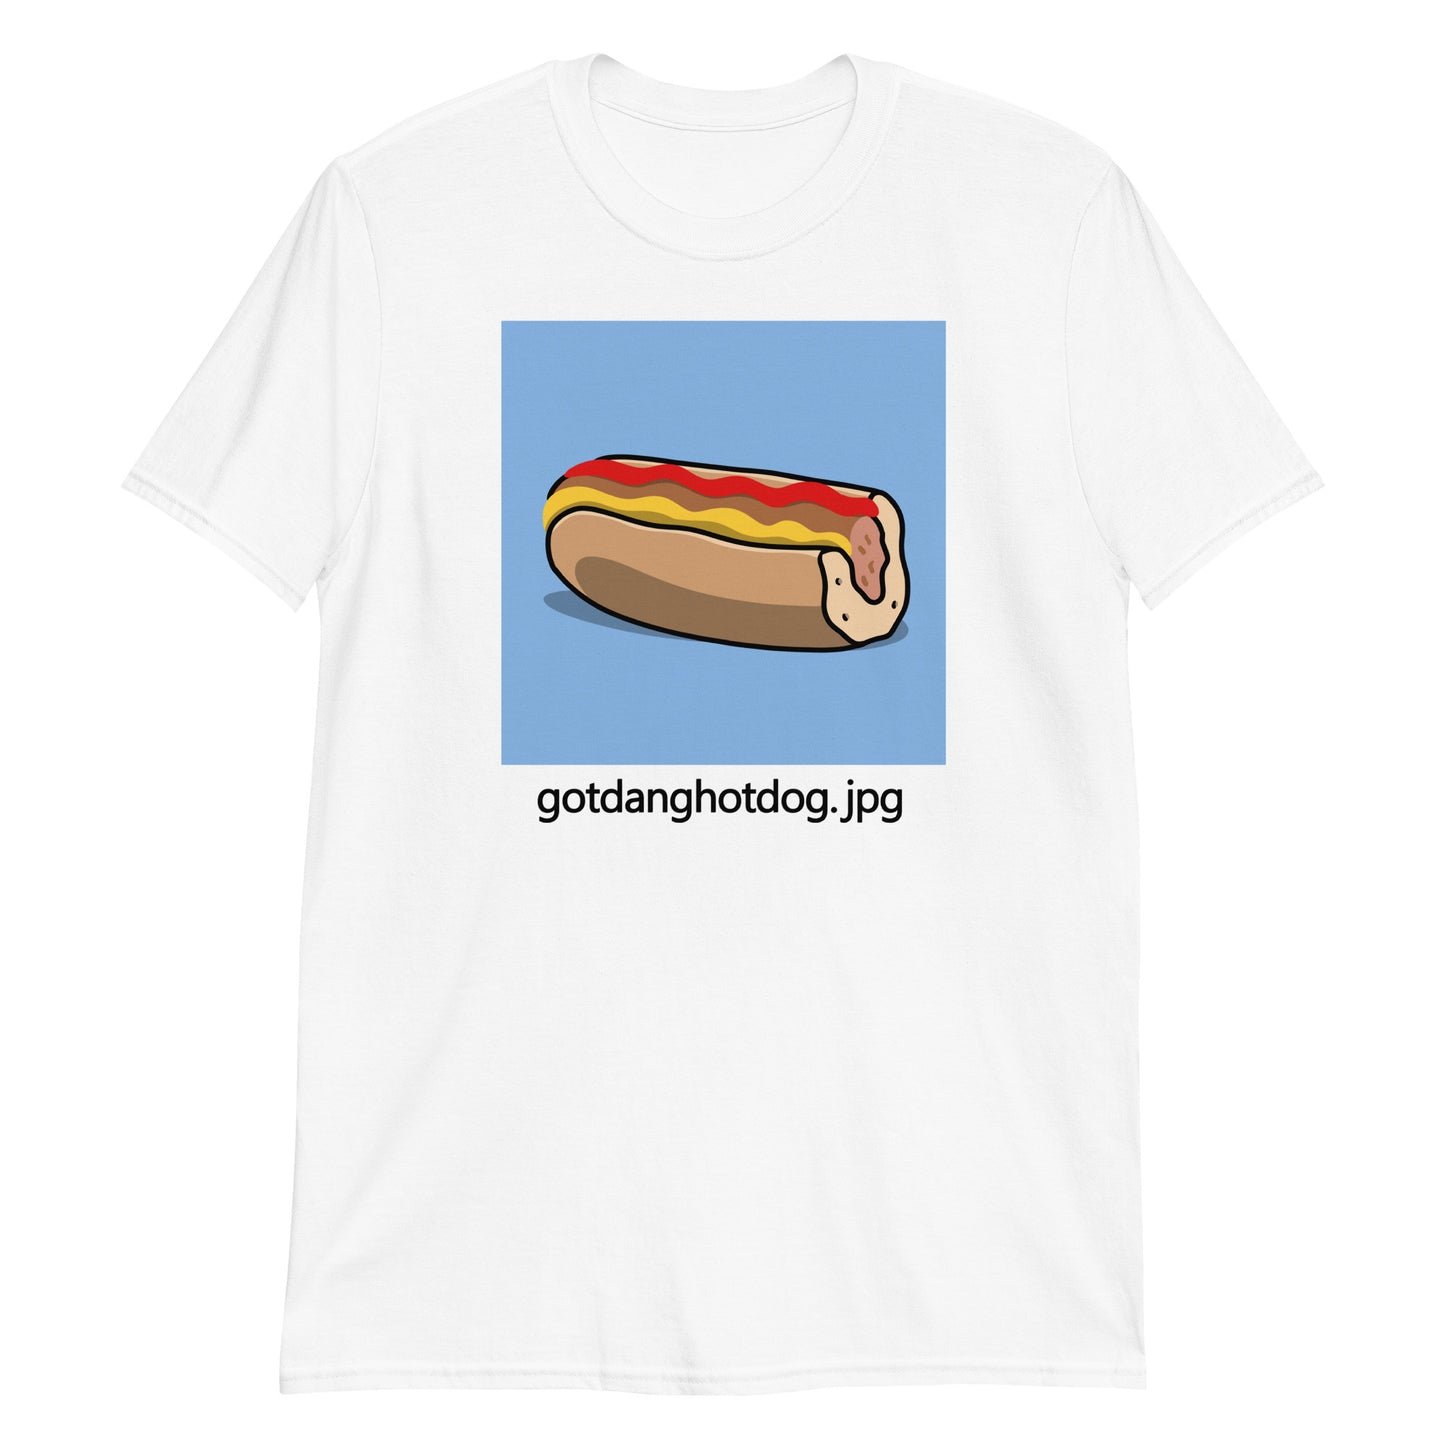 gotdanghotdog.jpg t-shirt